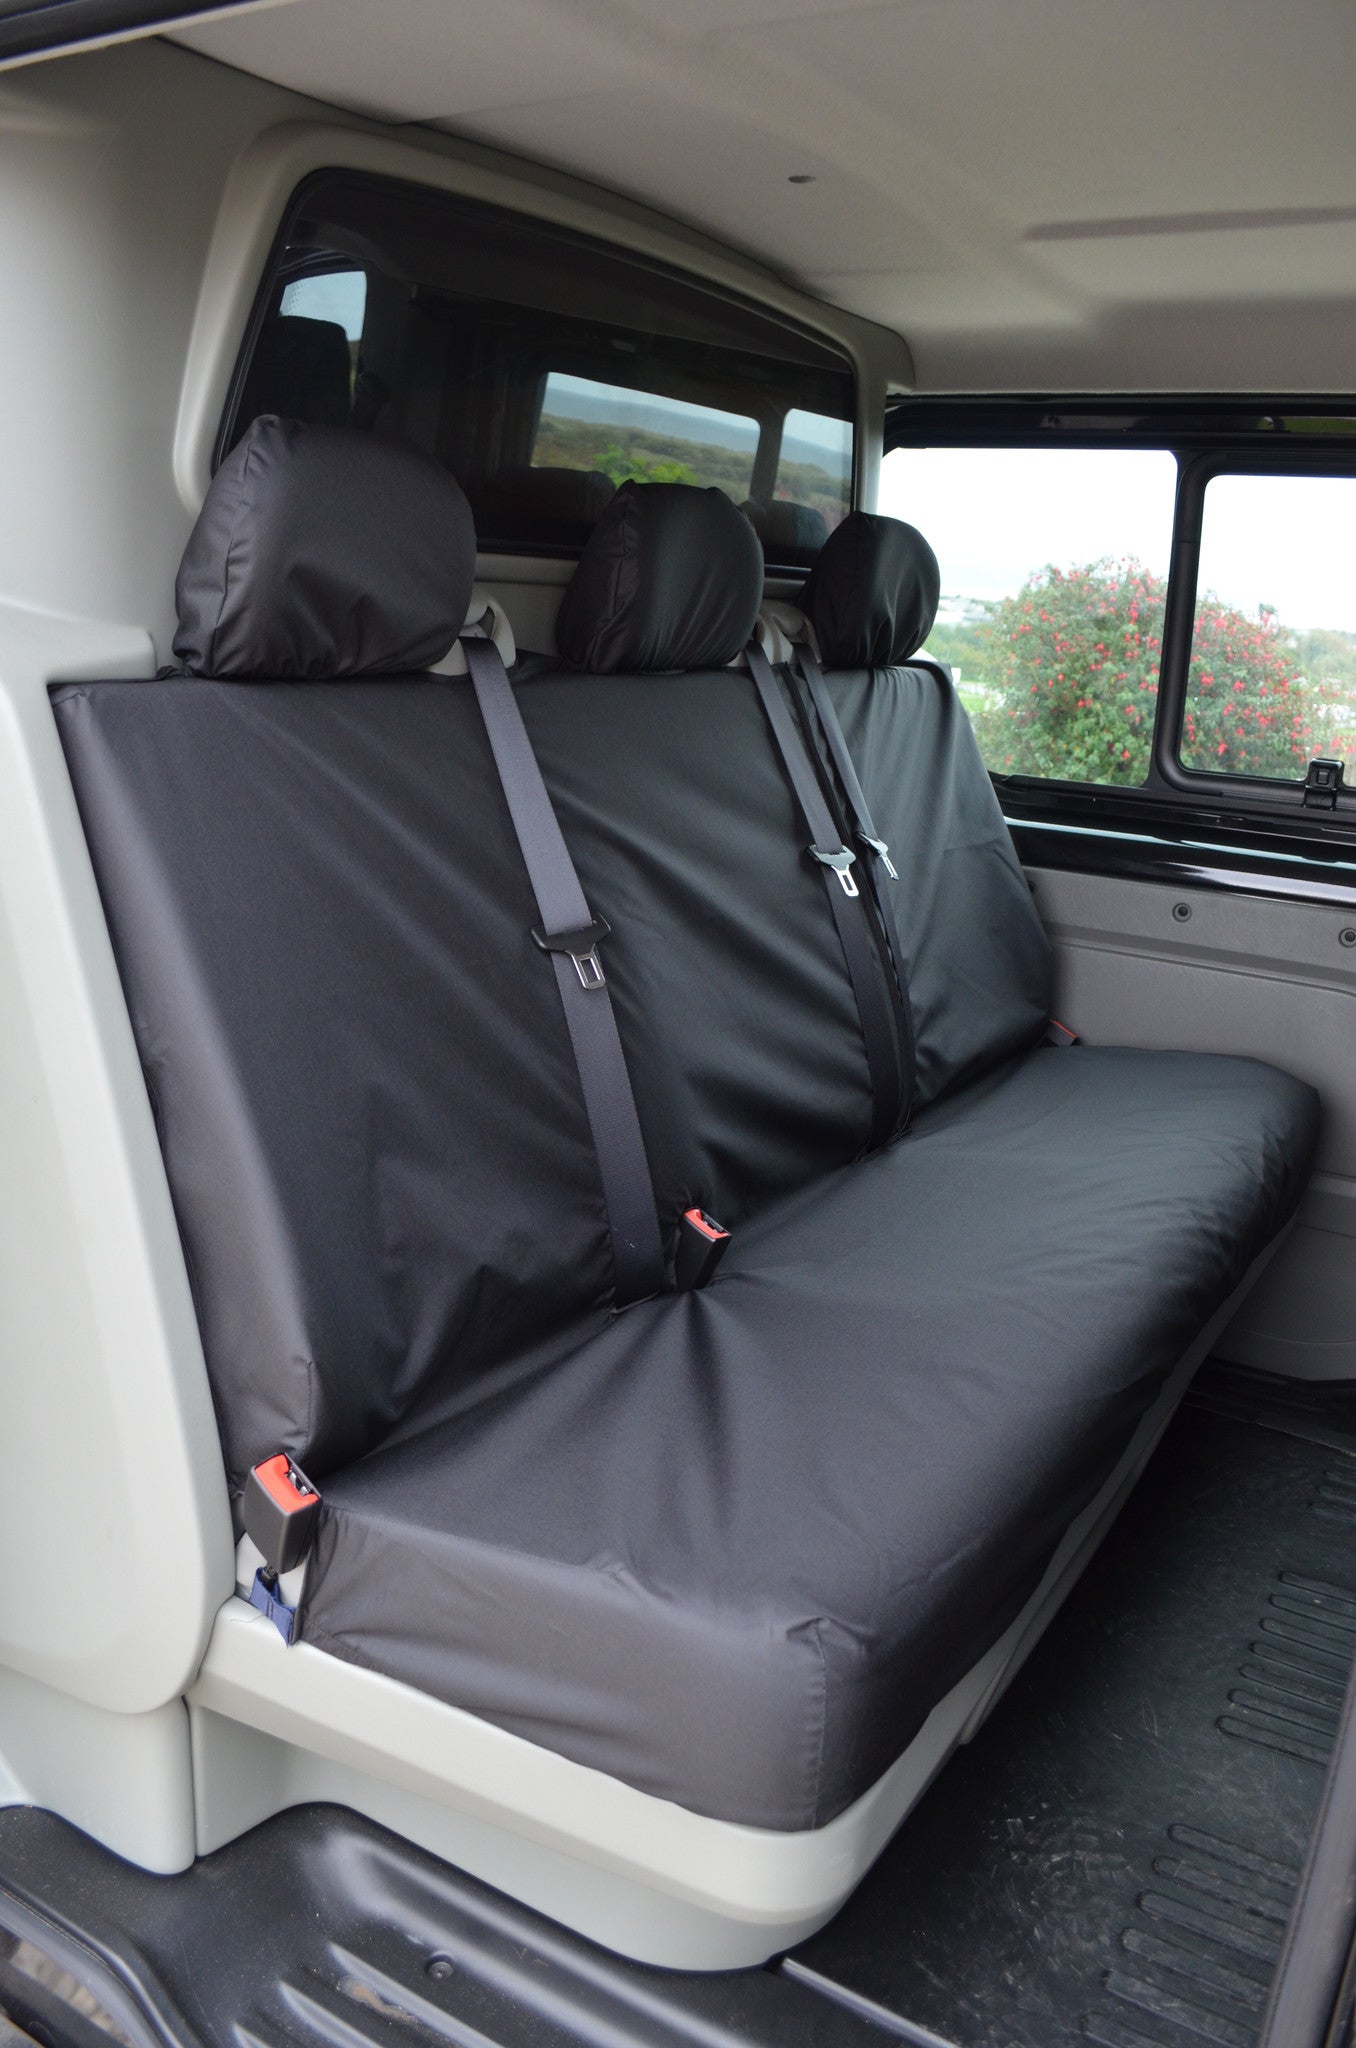 Nissan Primastar Crew Cab 2006 - 2014 Rear Seat Covers Black Turtle Covers Ltd